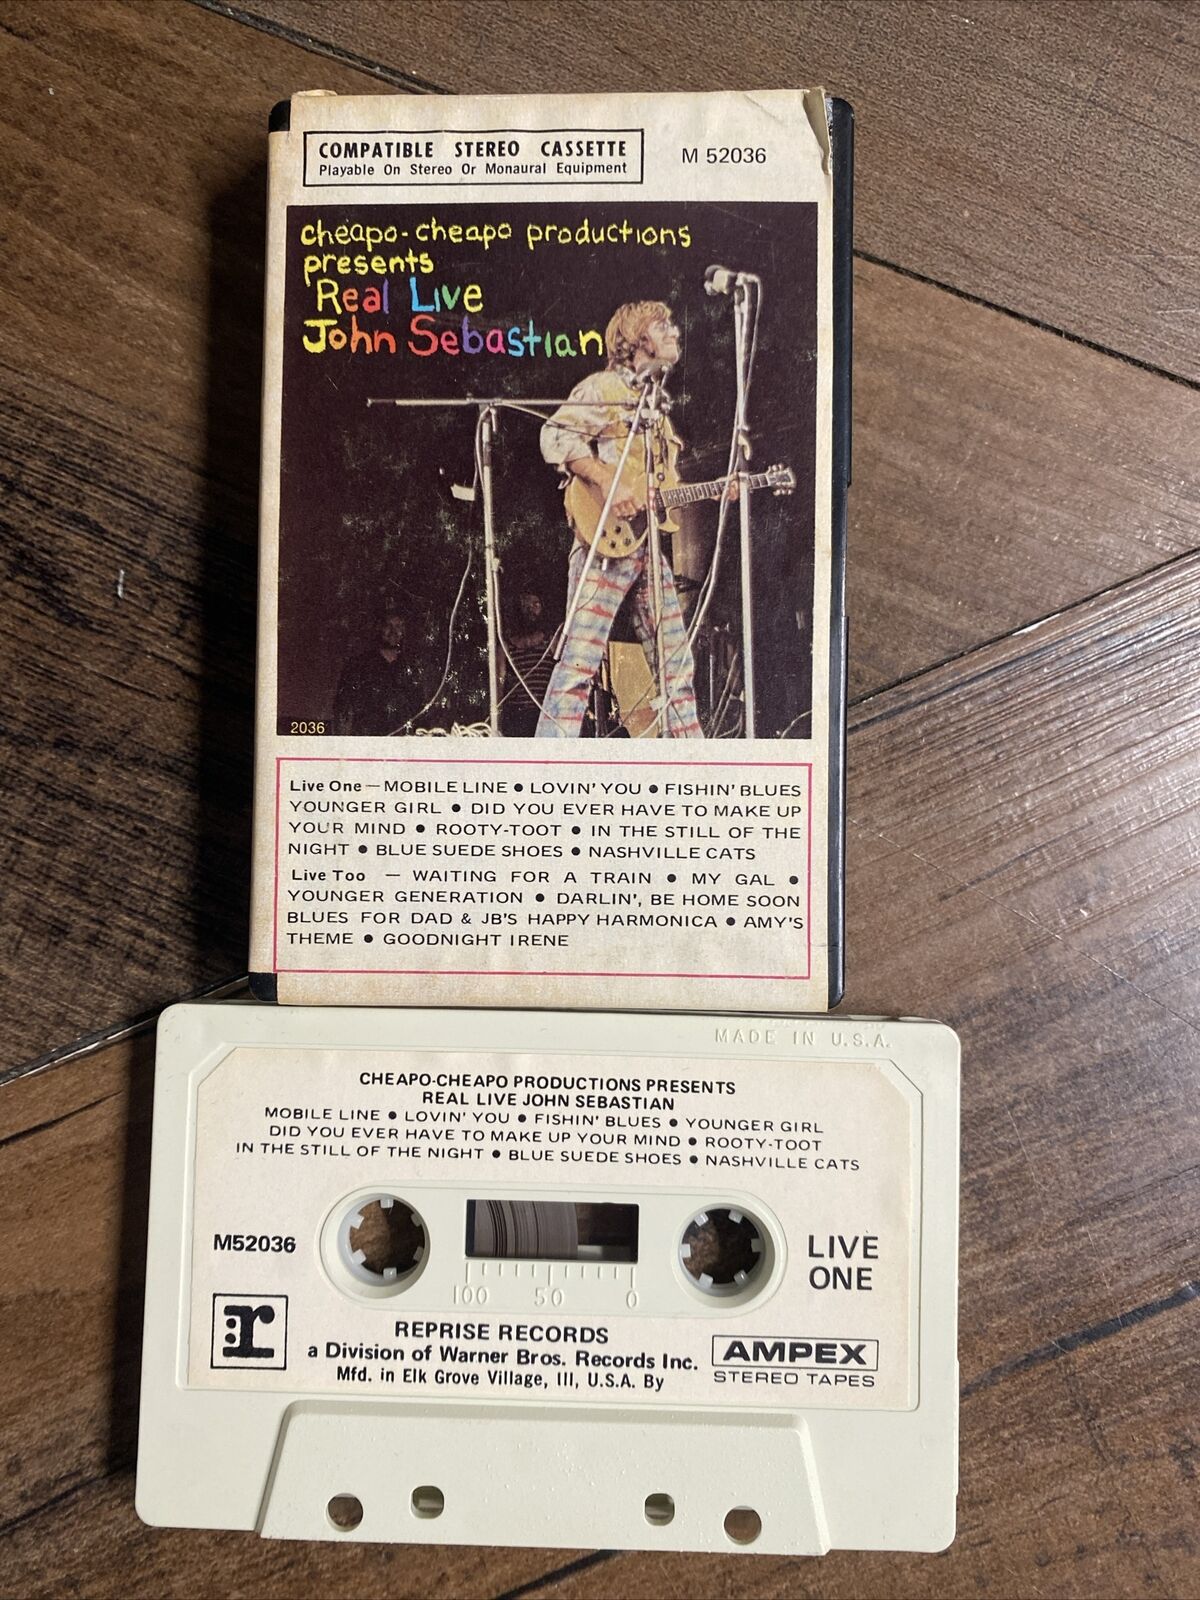 Vintage 1971 REAL LIVE JOHN SEBASTIAN Cheapo Cheapo Productions Cassette Tape